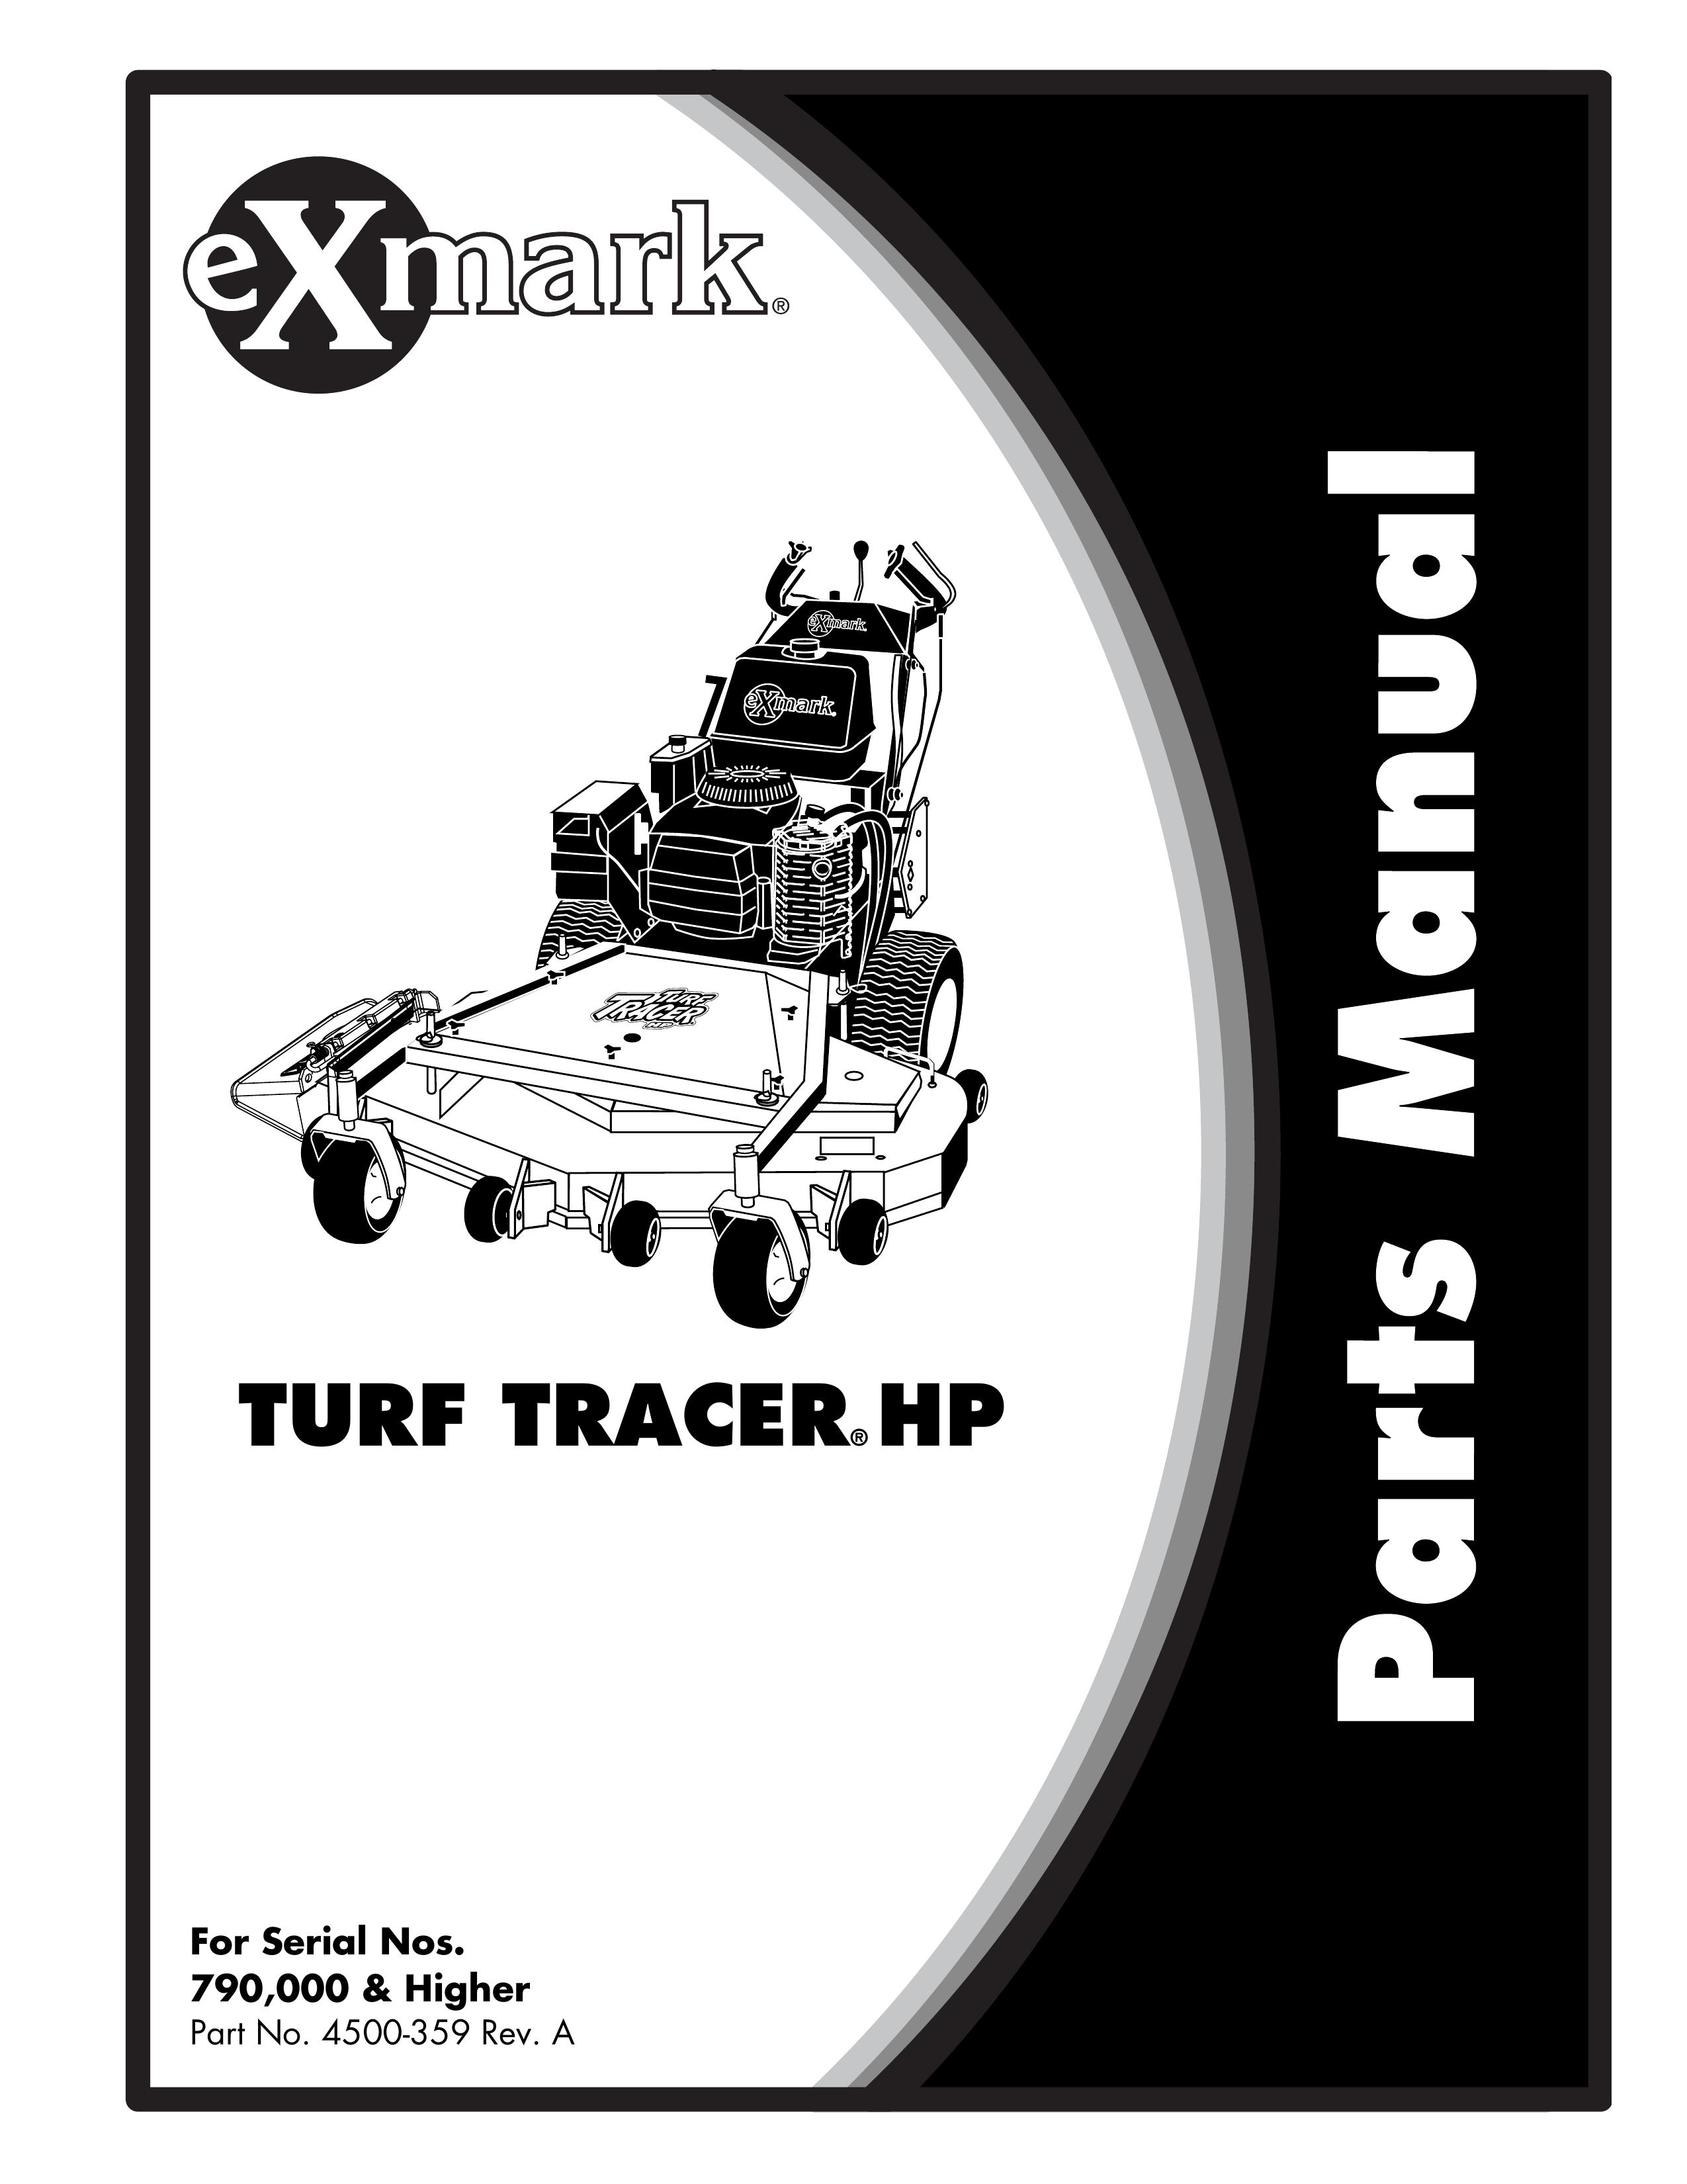 Exmark 4500-359 Lawn Mower User Manual